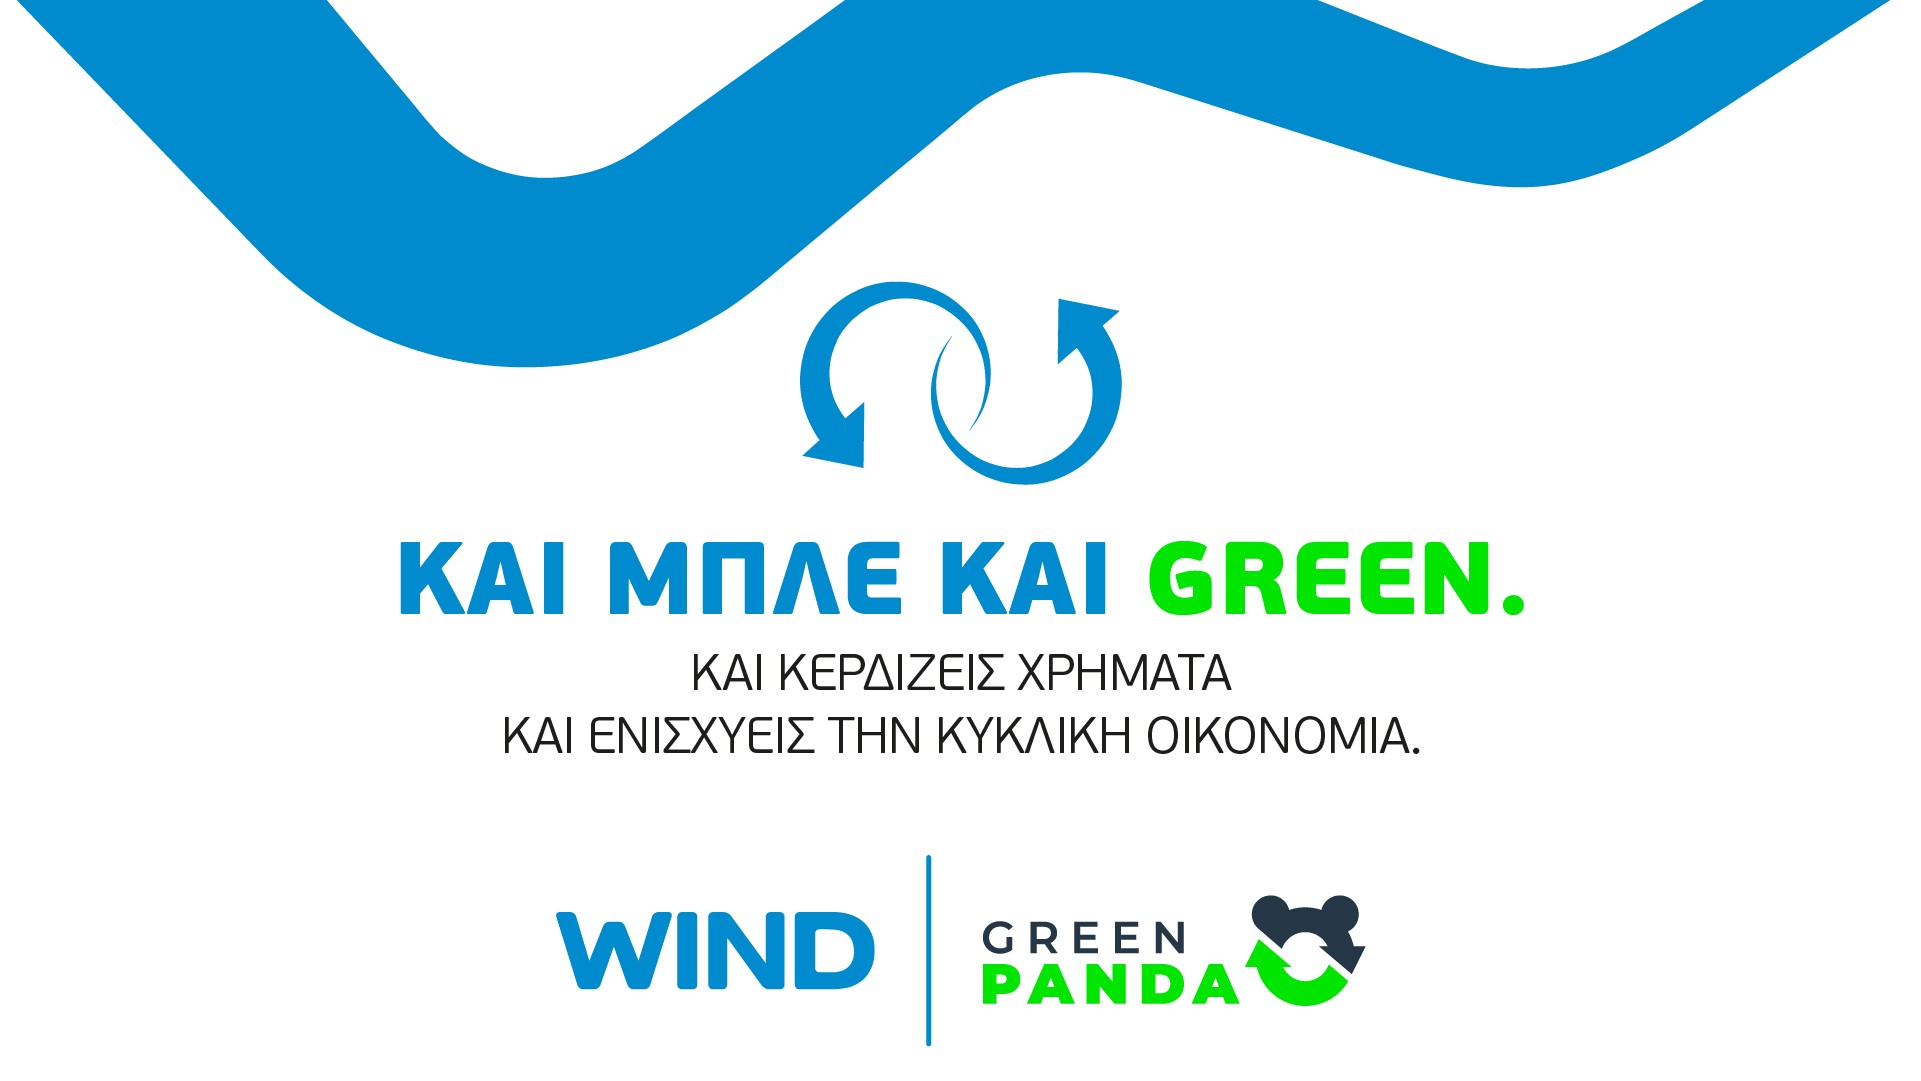 WIND Ελλάς: Συνεργάζεται με την GREEN PANDA και συμβάλλει στην κυκλική οικονομία